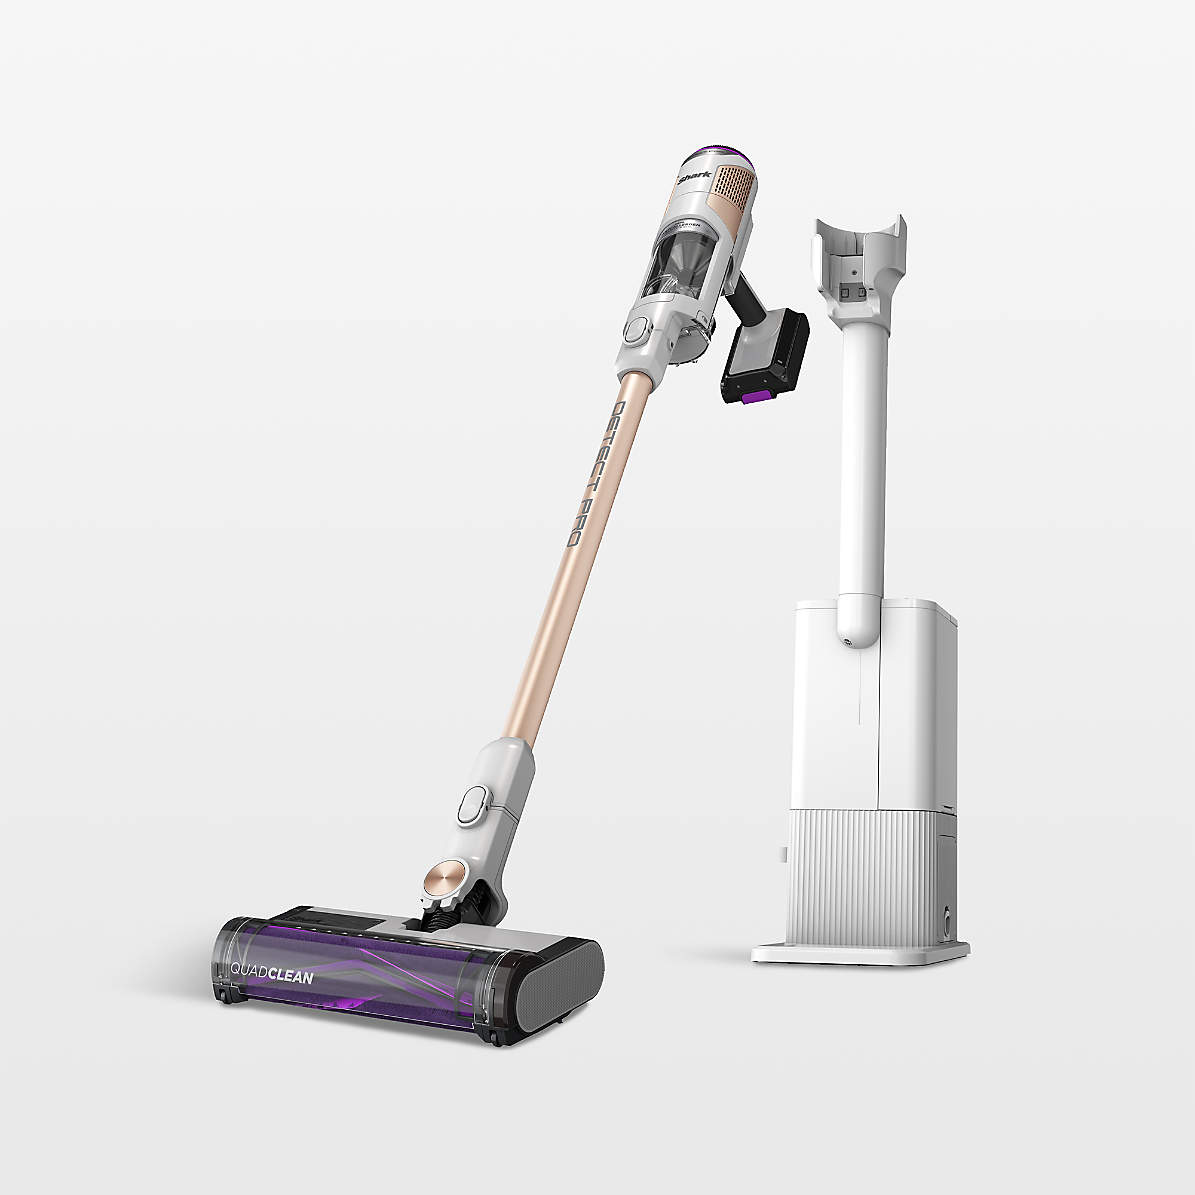 Powerful Cleaning Companion: Tineco Vacuum Cleaner - Sleek